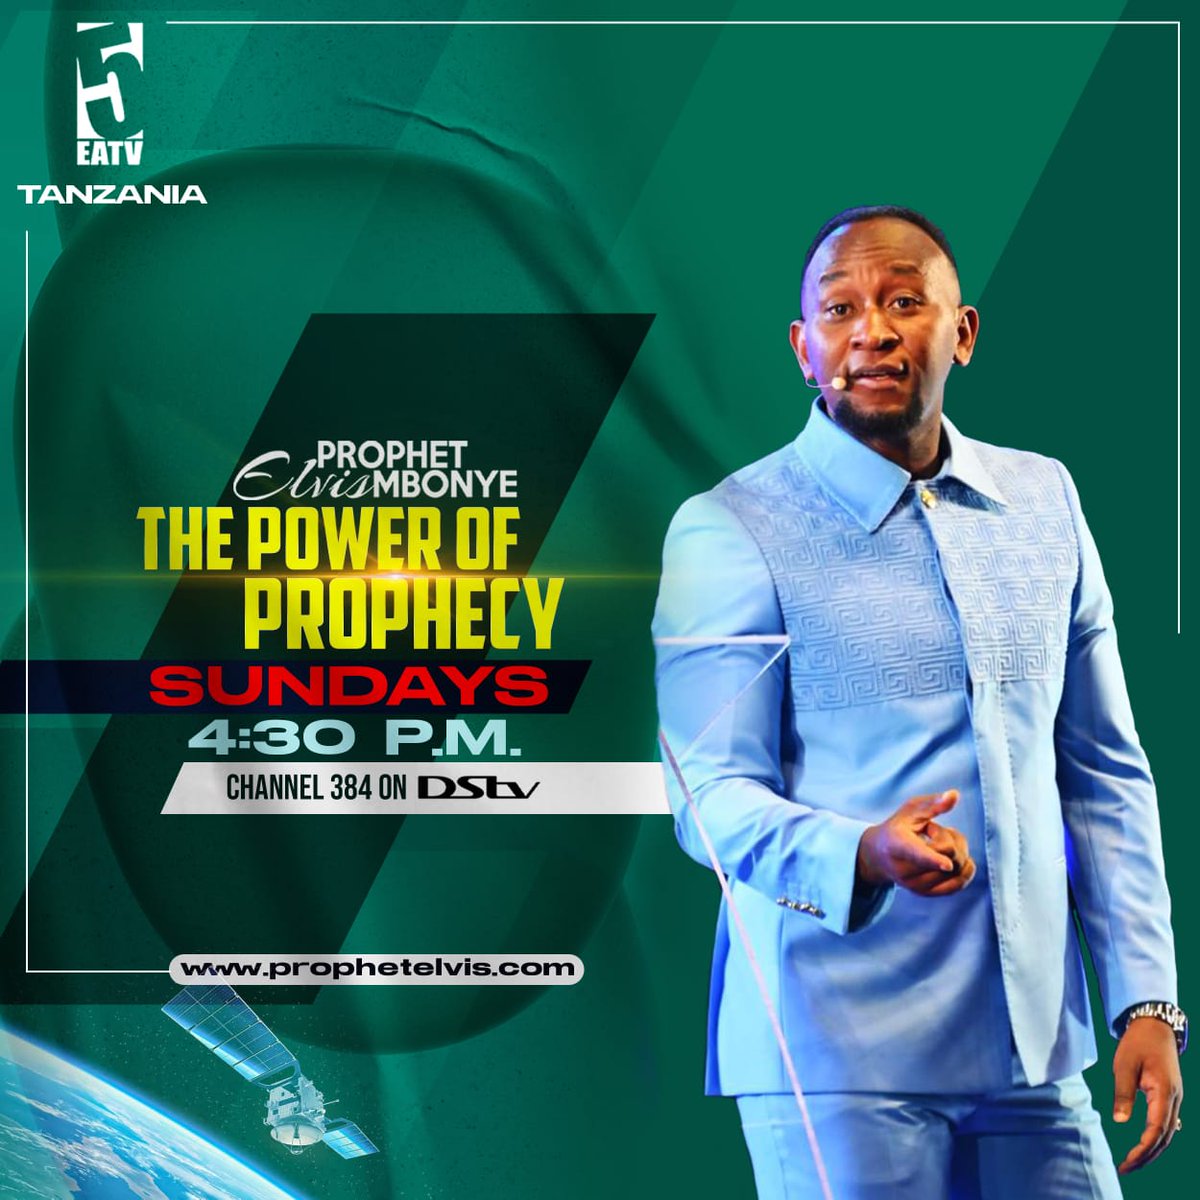 This Sunday November 12, 2023! Prophet Elvis Mbonye on EATV Tanzania 4:30 pm East African Time (EAT)!! Live stream at prophetelvis.com/live #ProphetElvisMbonye